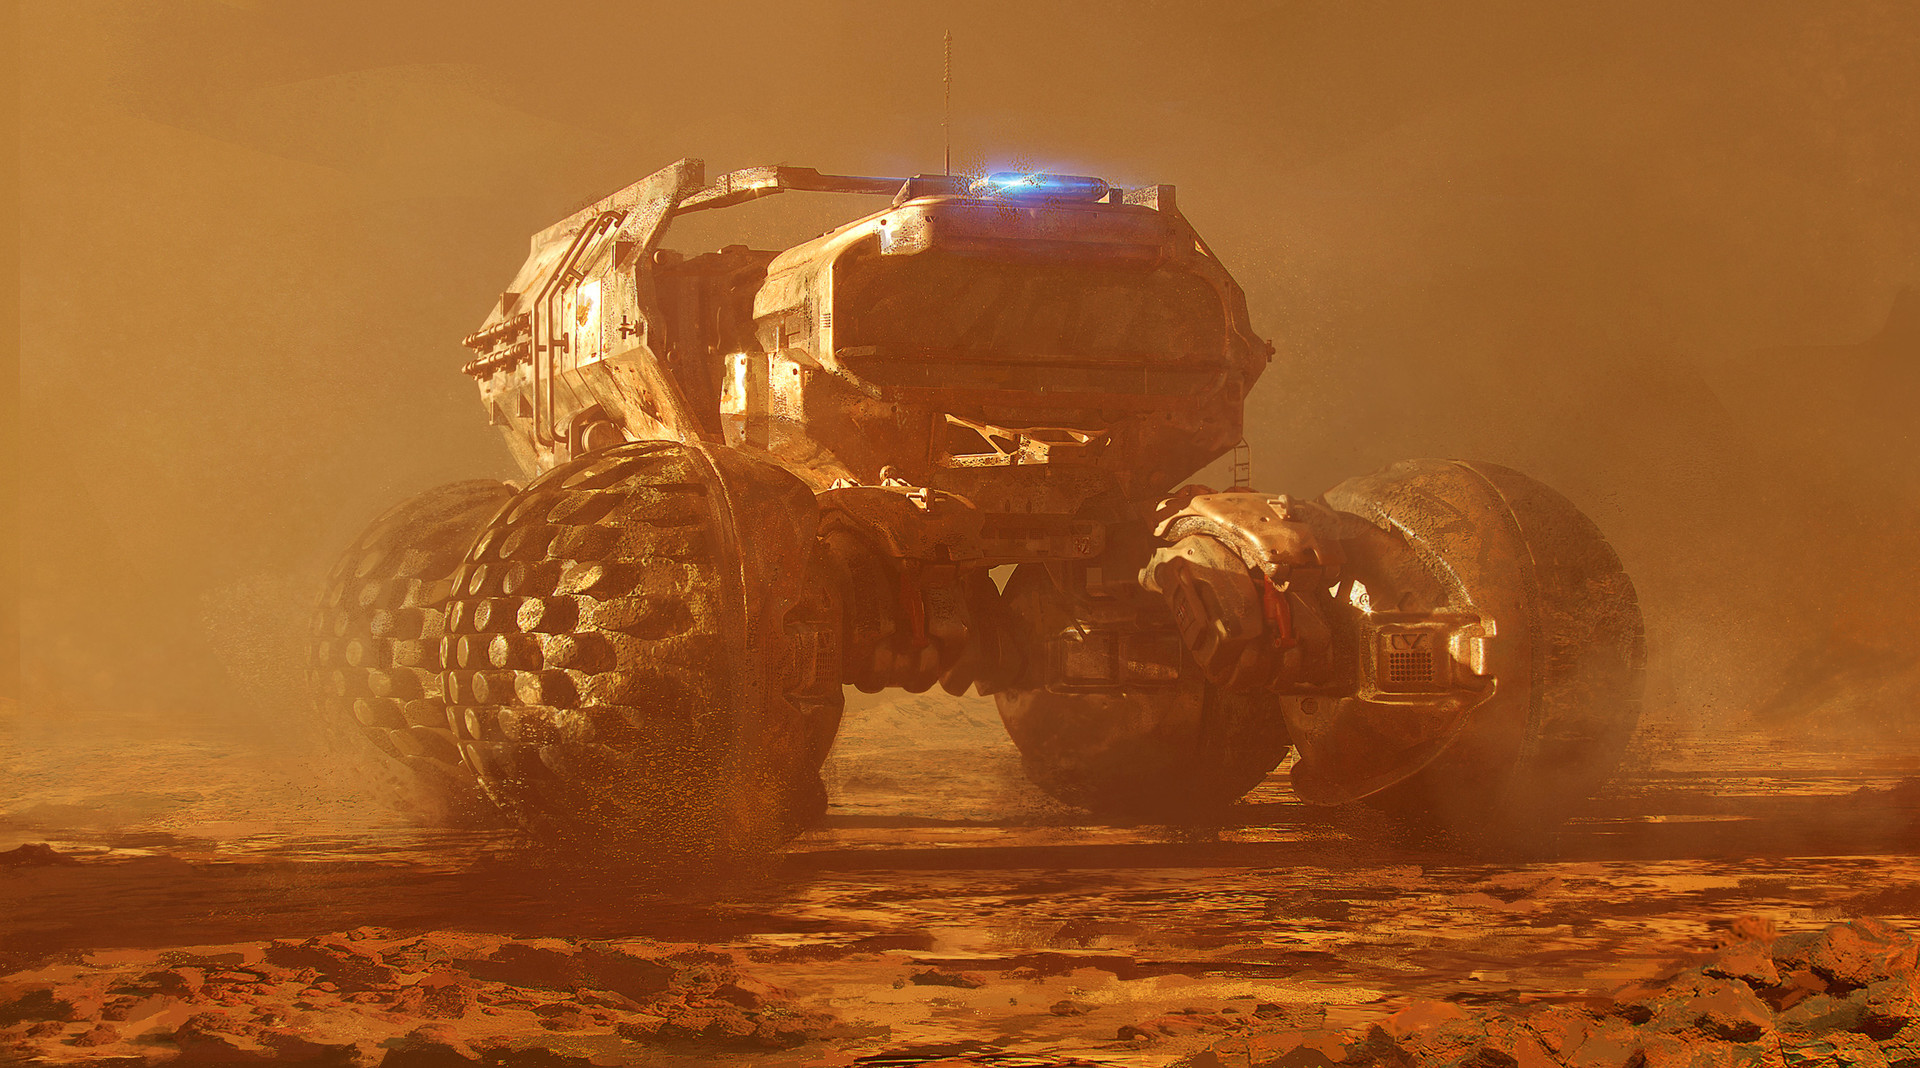 General 1920x1068 vehicle dust sandstorms wasteland sand monster trucks Ares (artist)